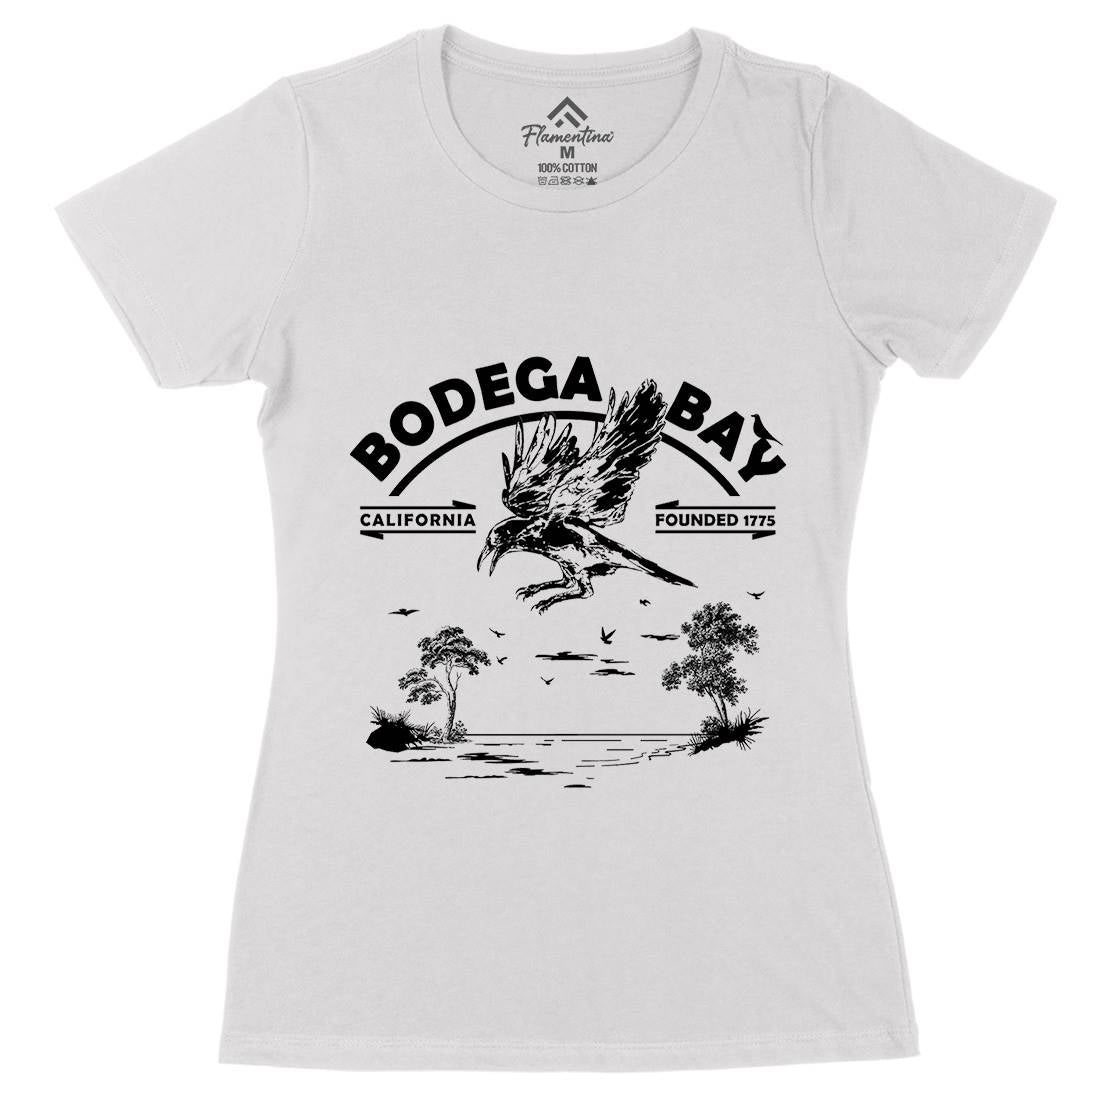 Bodega Bay Womens Organic Crew Neck T-Shirt Horror D310